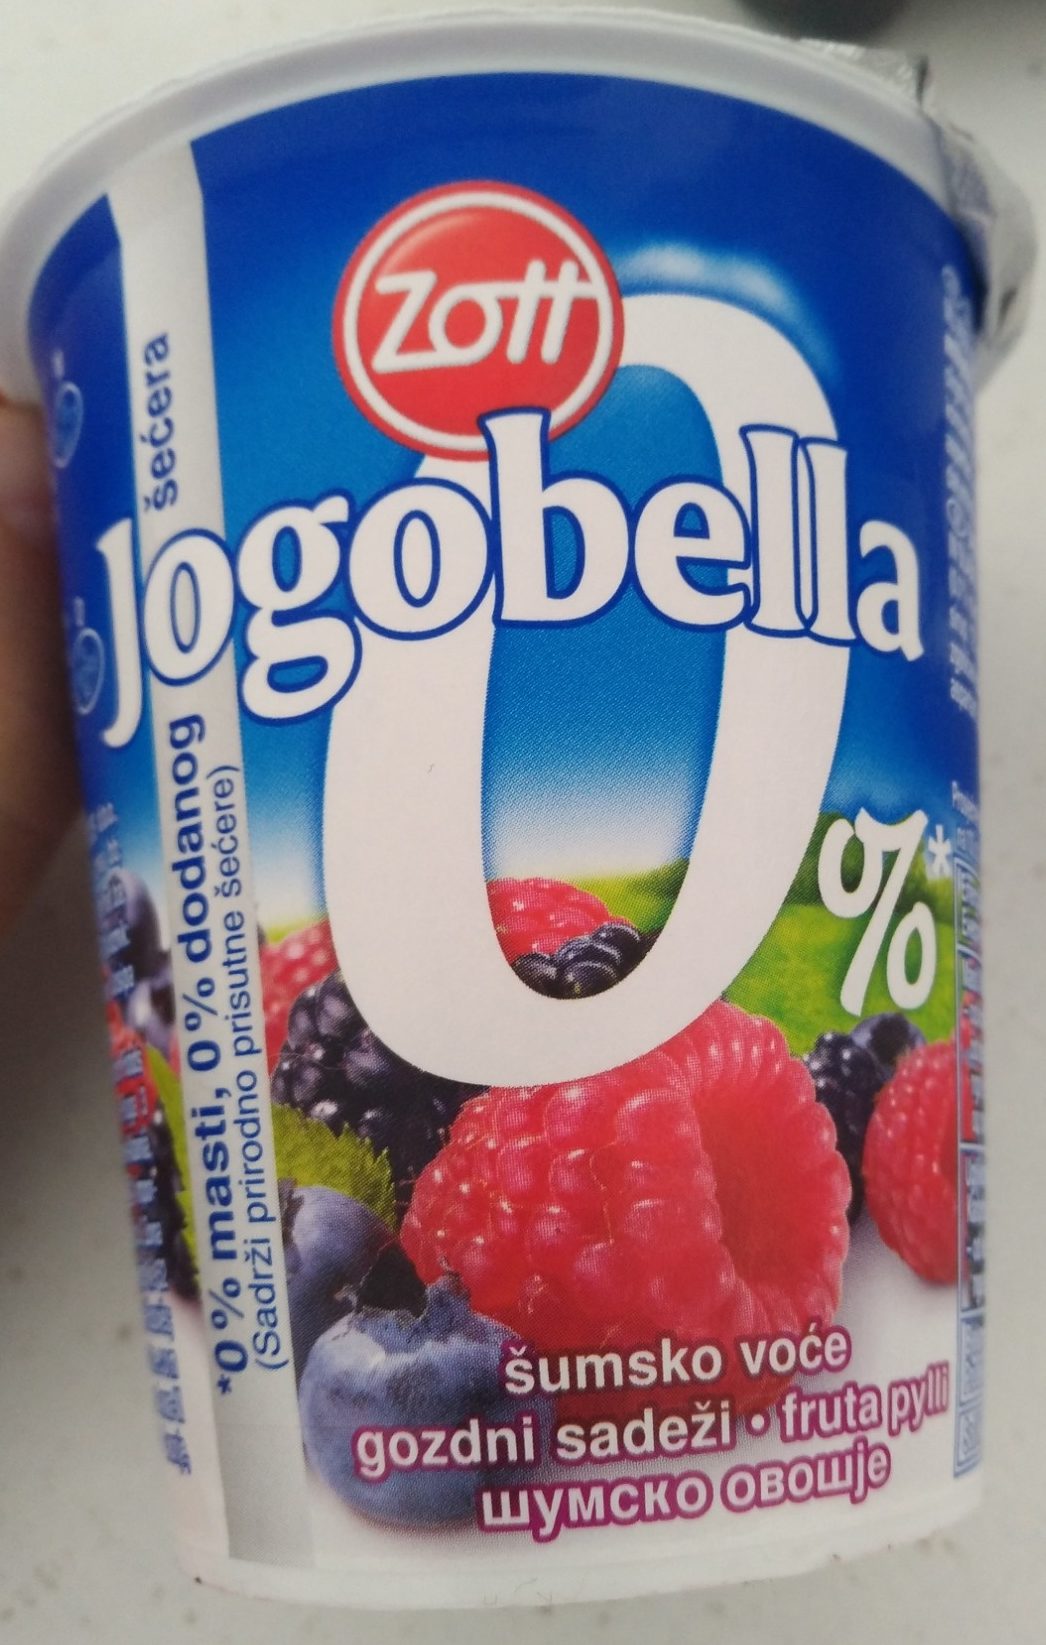 Zott Jogobella 0% - Product - sq